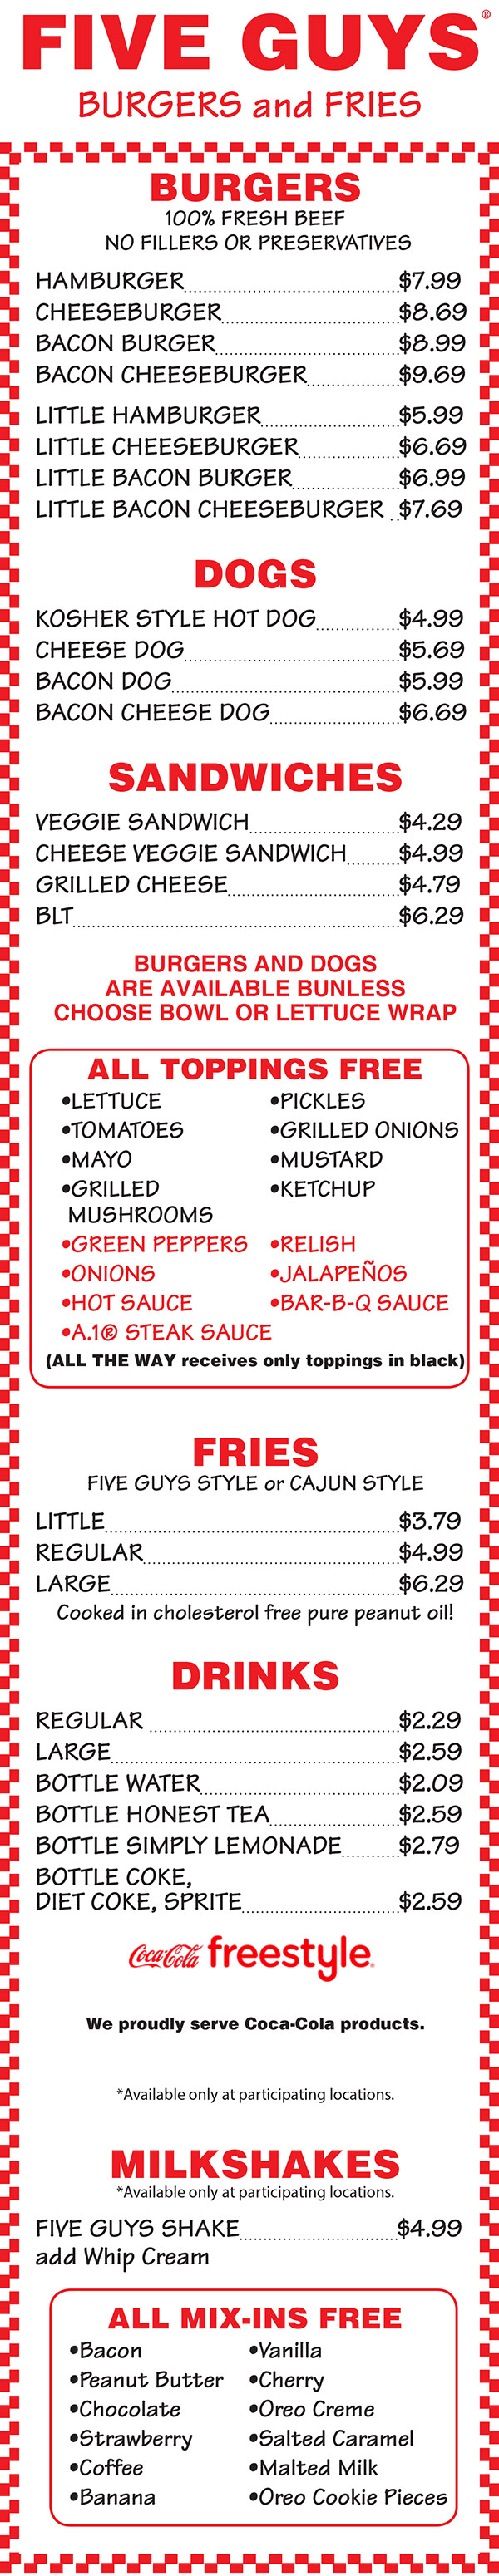 five guys burgers and fries menu